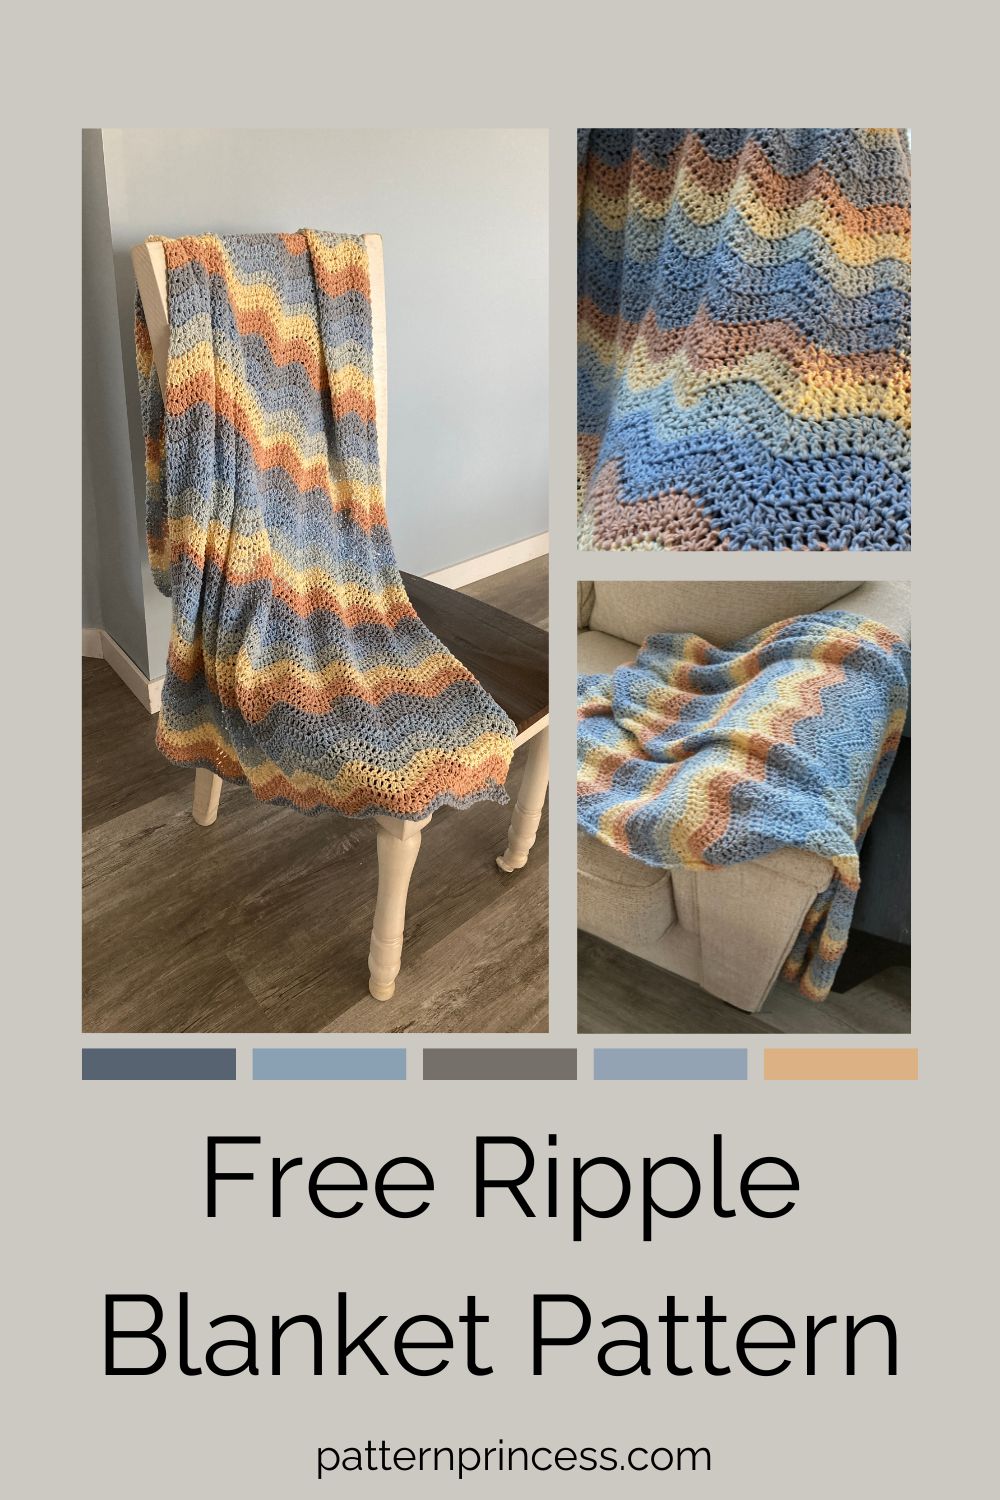 Free Ripple Blanket Pattern